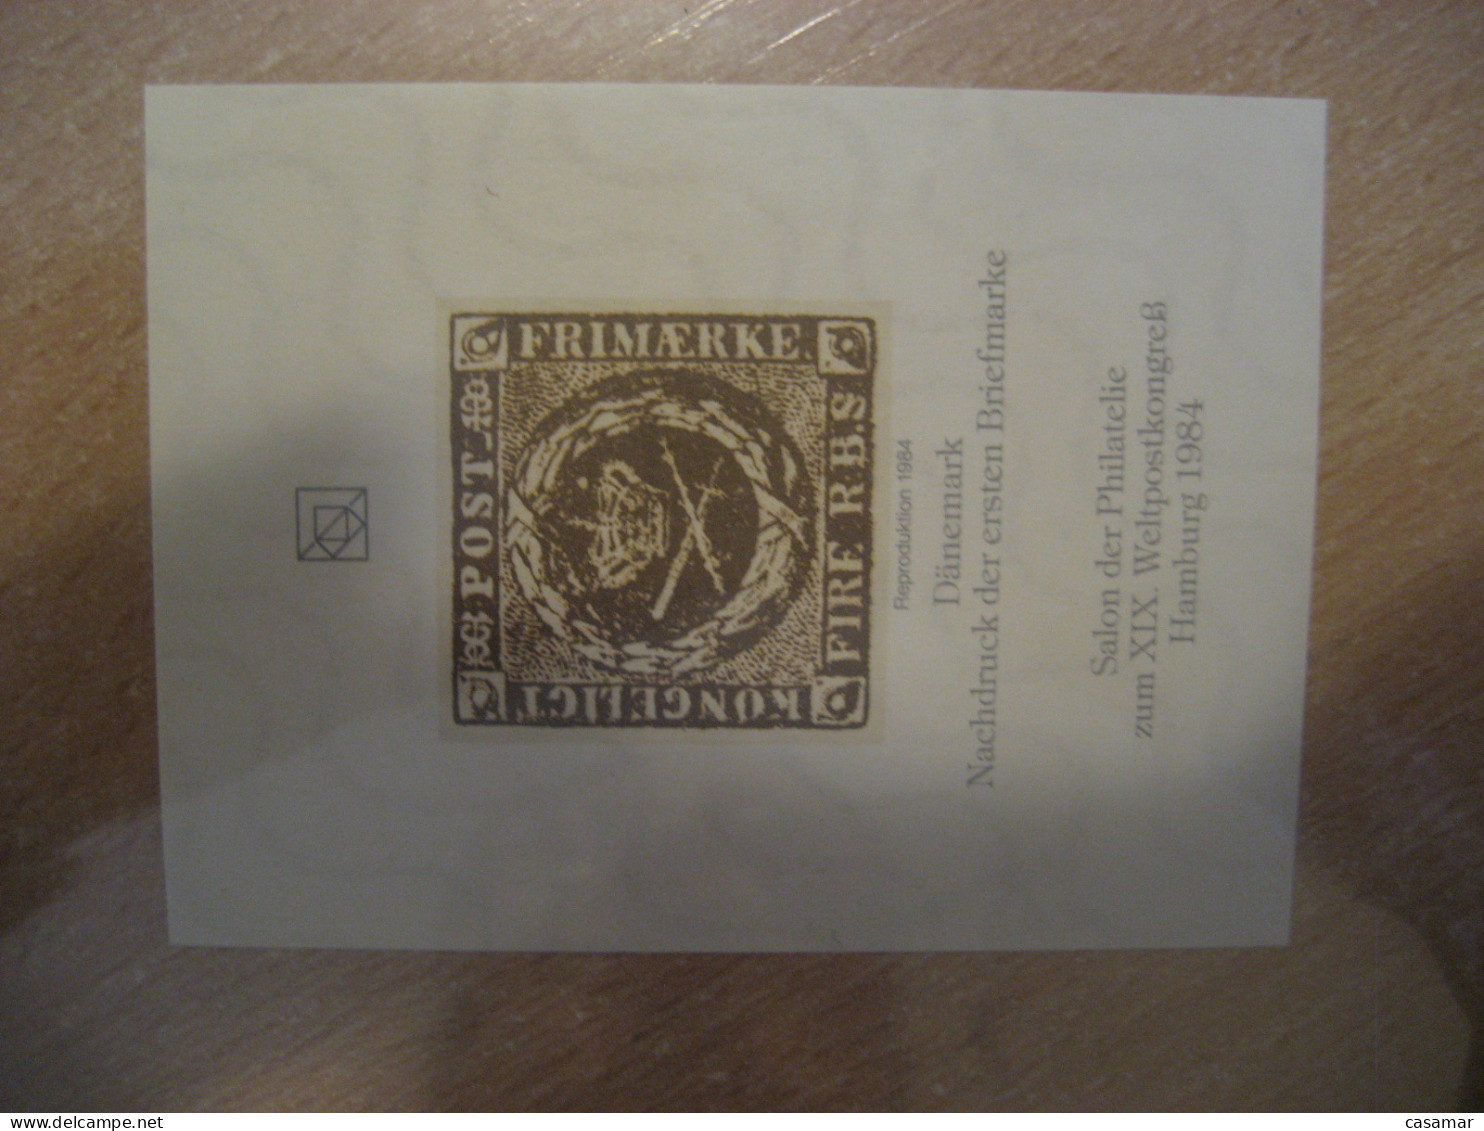 HAMBURG 1984 DENMARK Imperforated Reproduktion Proof Epreuve Nachdruck Poster Stamp Vignette GERMANY Label - Proeven & Herdrukken